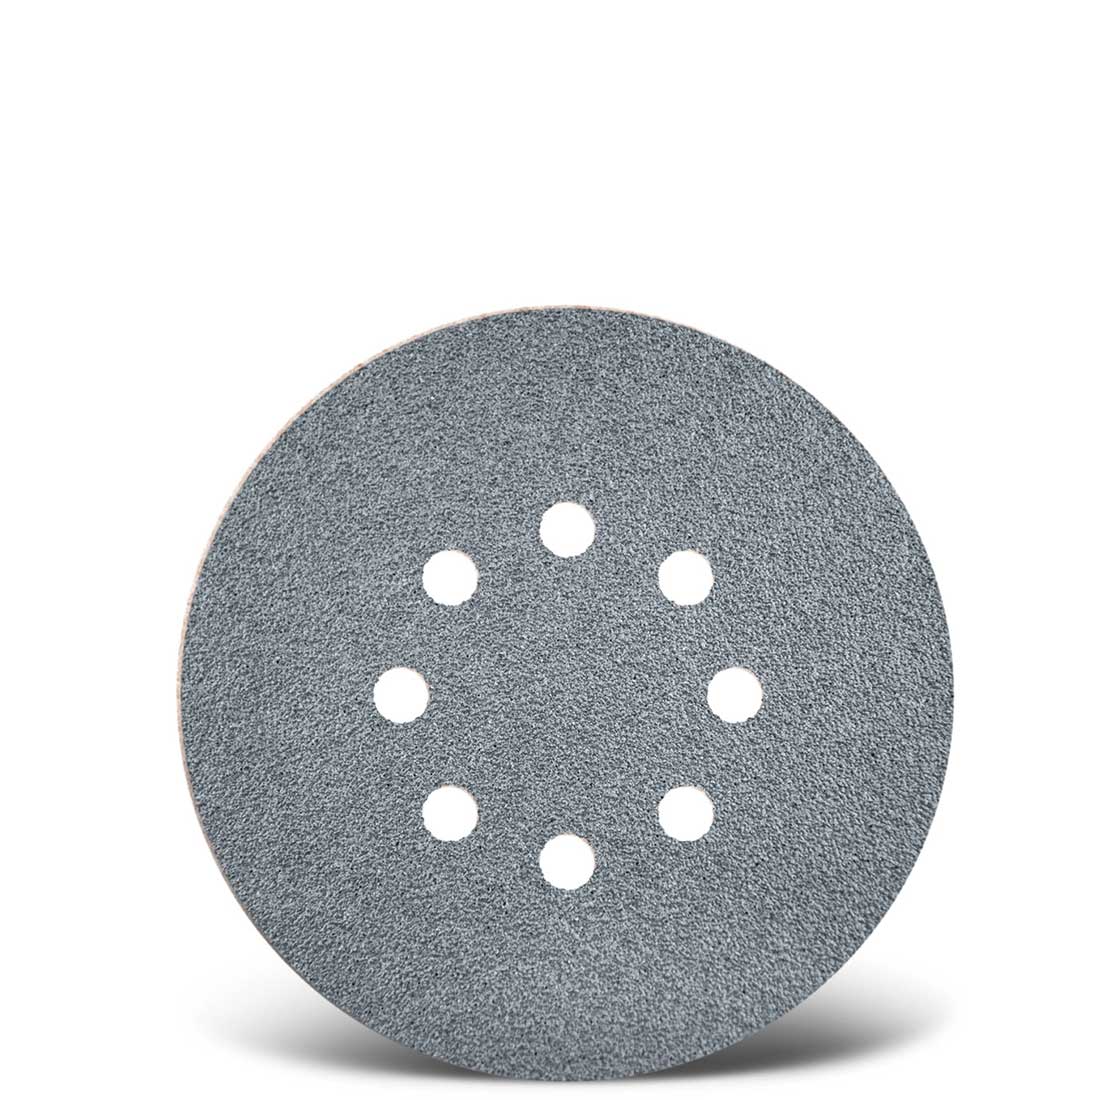 MENZER hook & loop sanding discs for random orbital sanders, G40–400, Ø 150 mm / 8 hole / semi-friable aluminium oxide